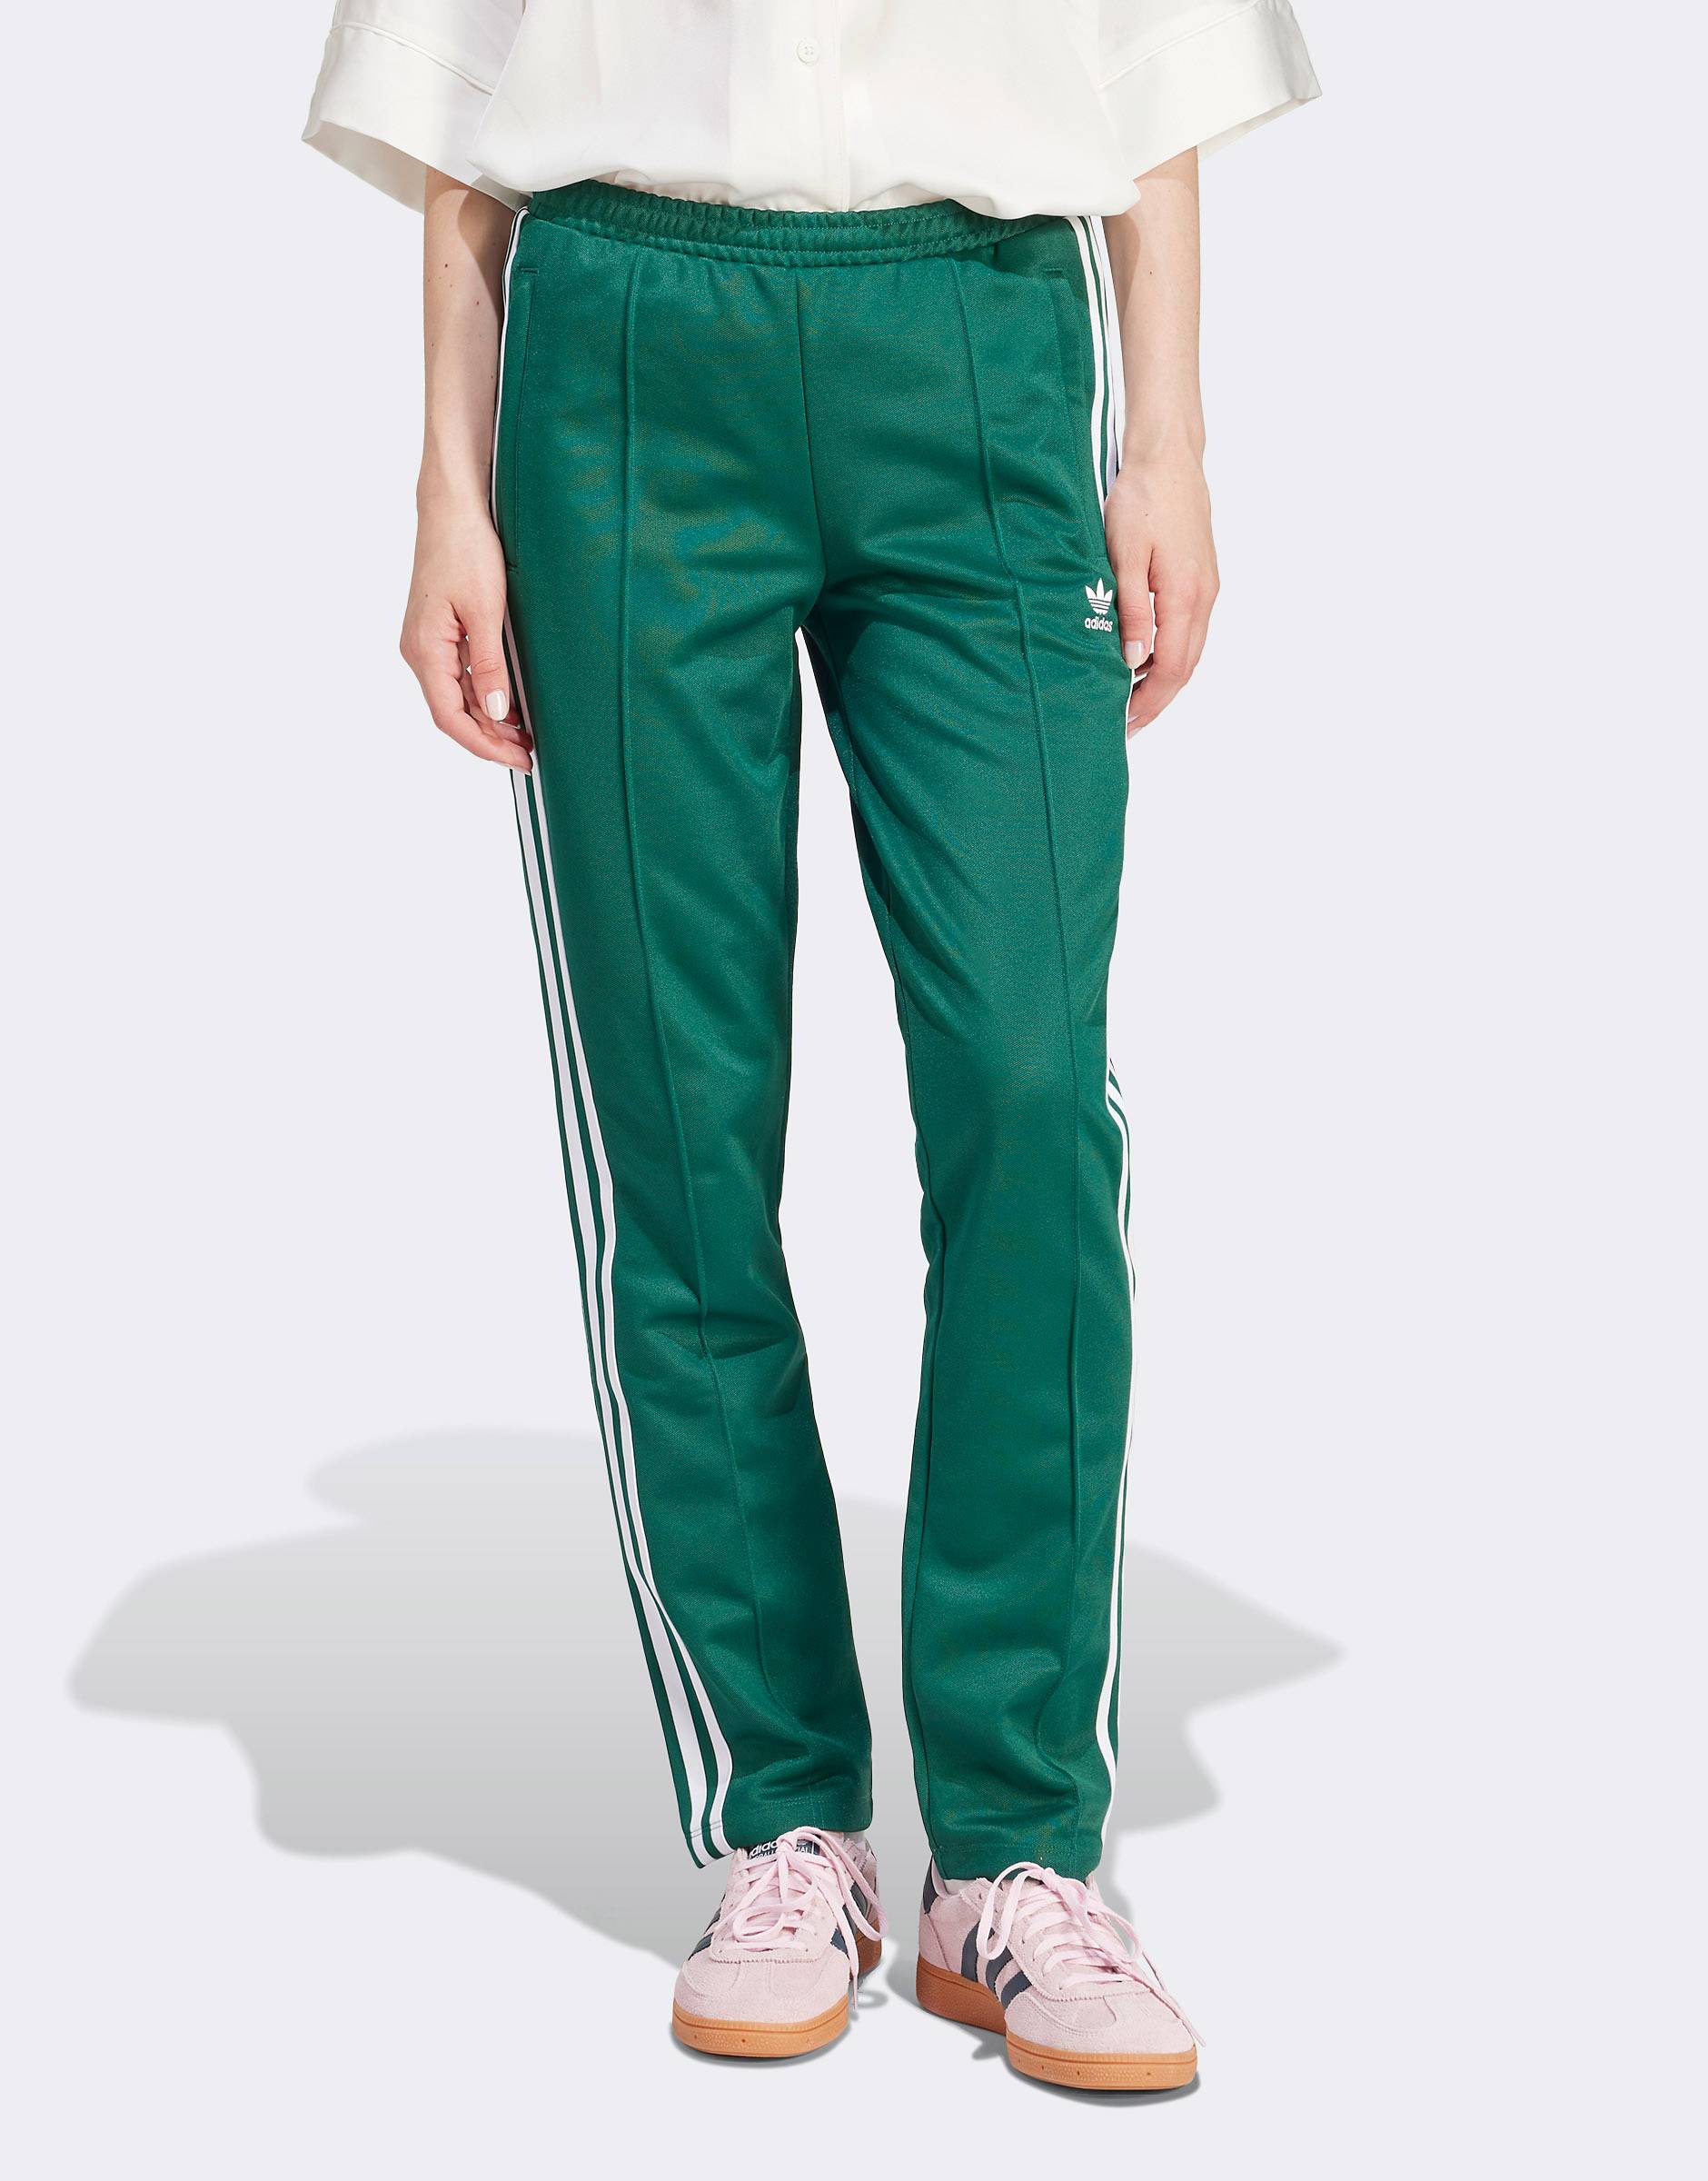 Adidas Originals Montreal Track Pants in Green